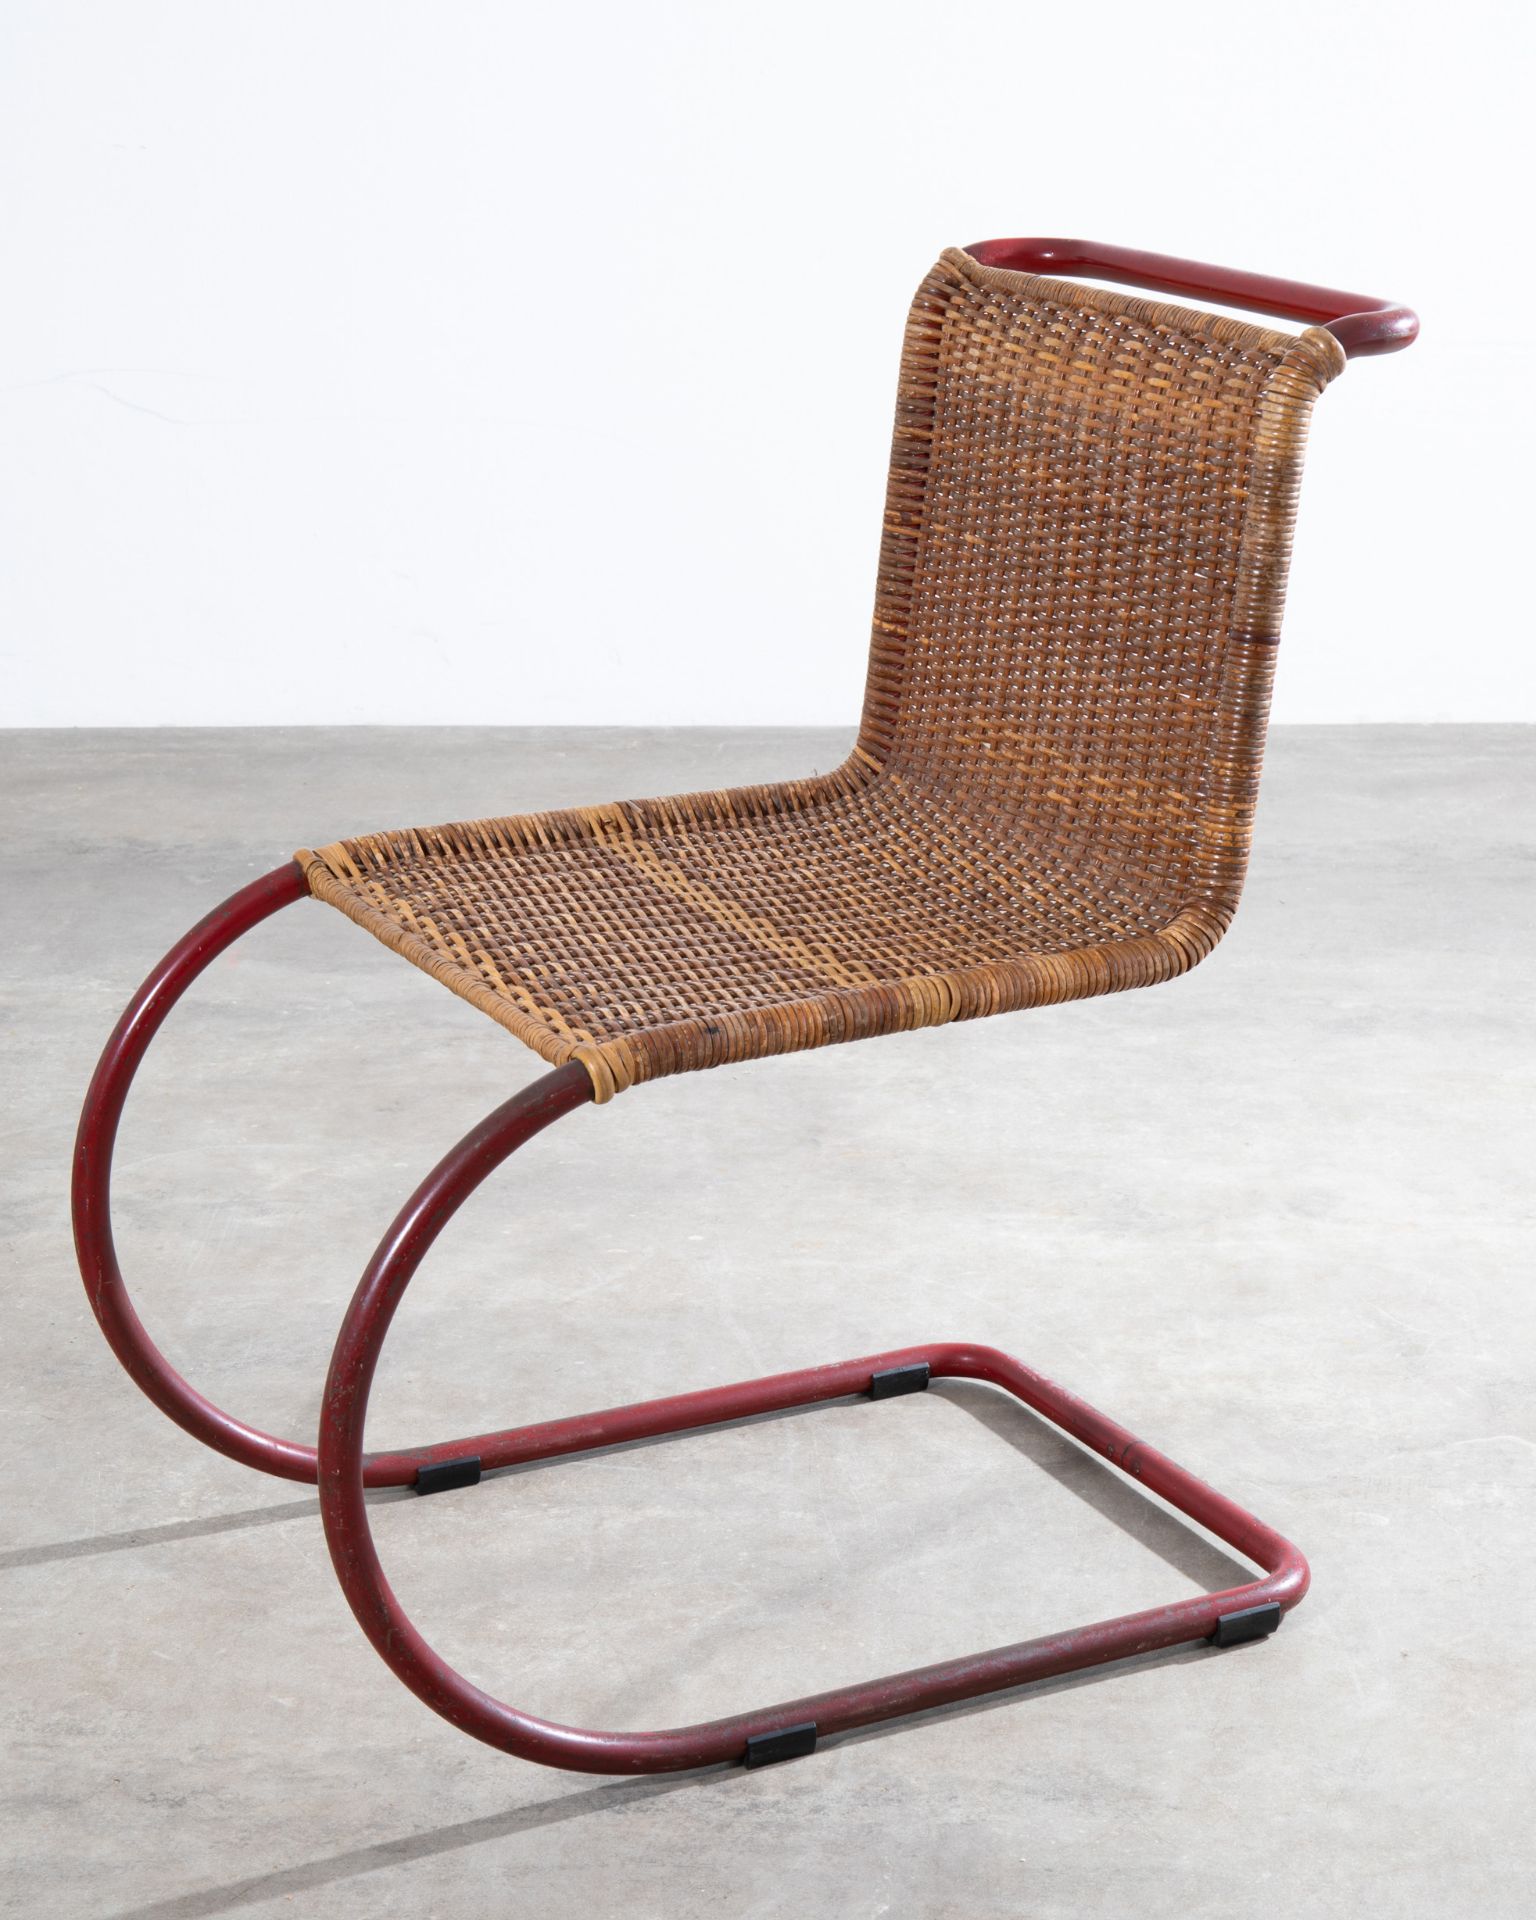 L. Mies van der Rohe, Berliner Metallgewerbe J. Müller, early MR 10 cantilever chair